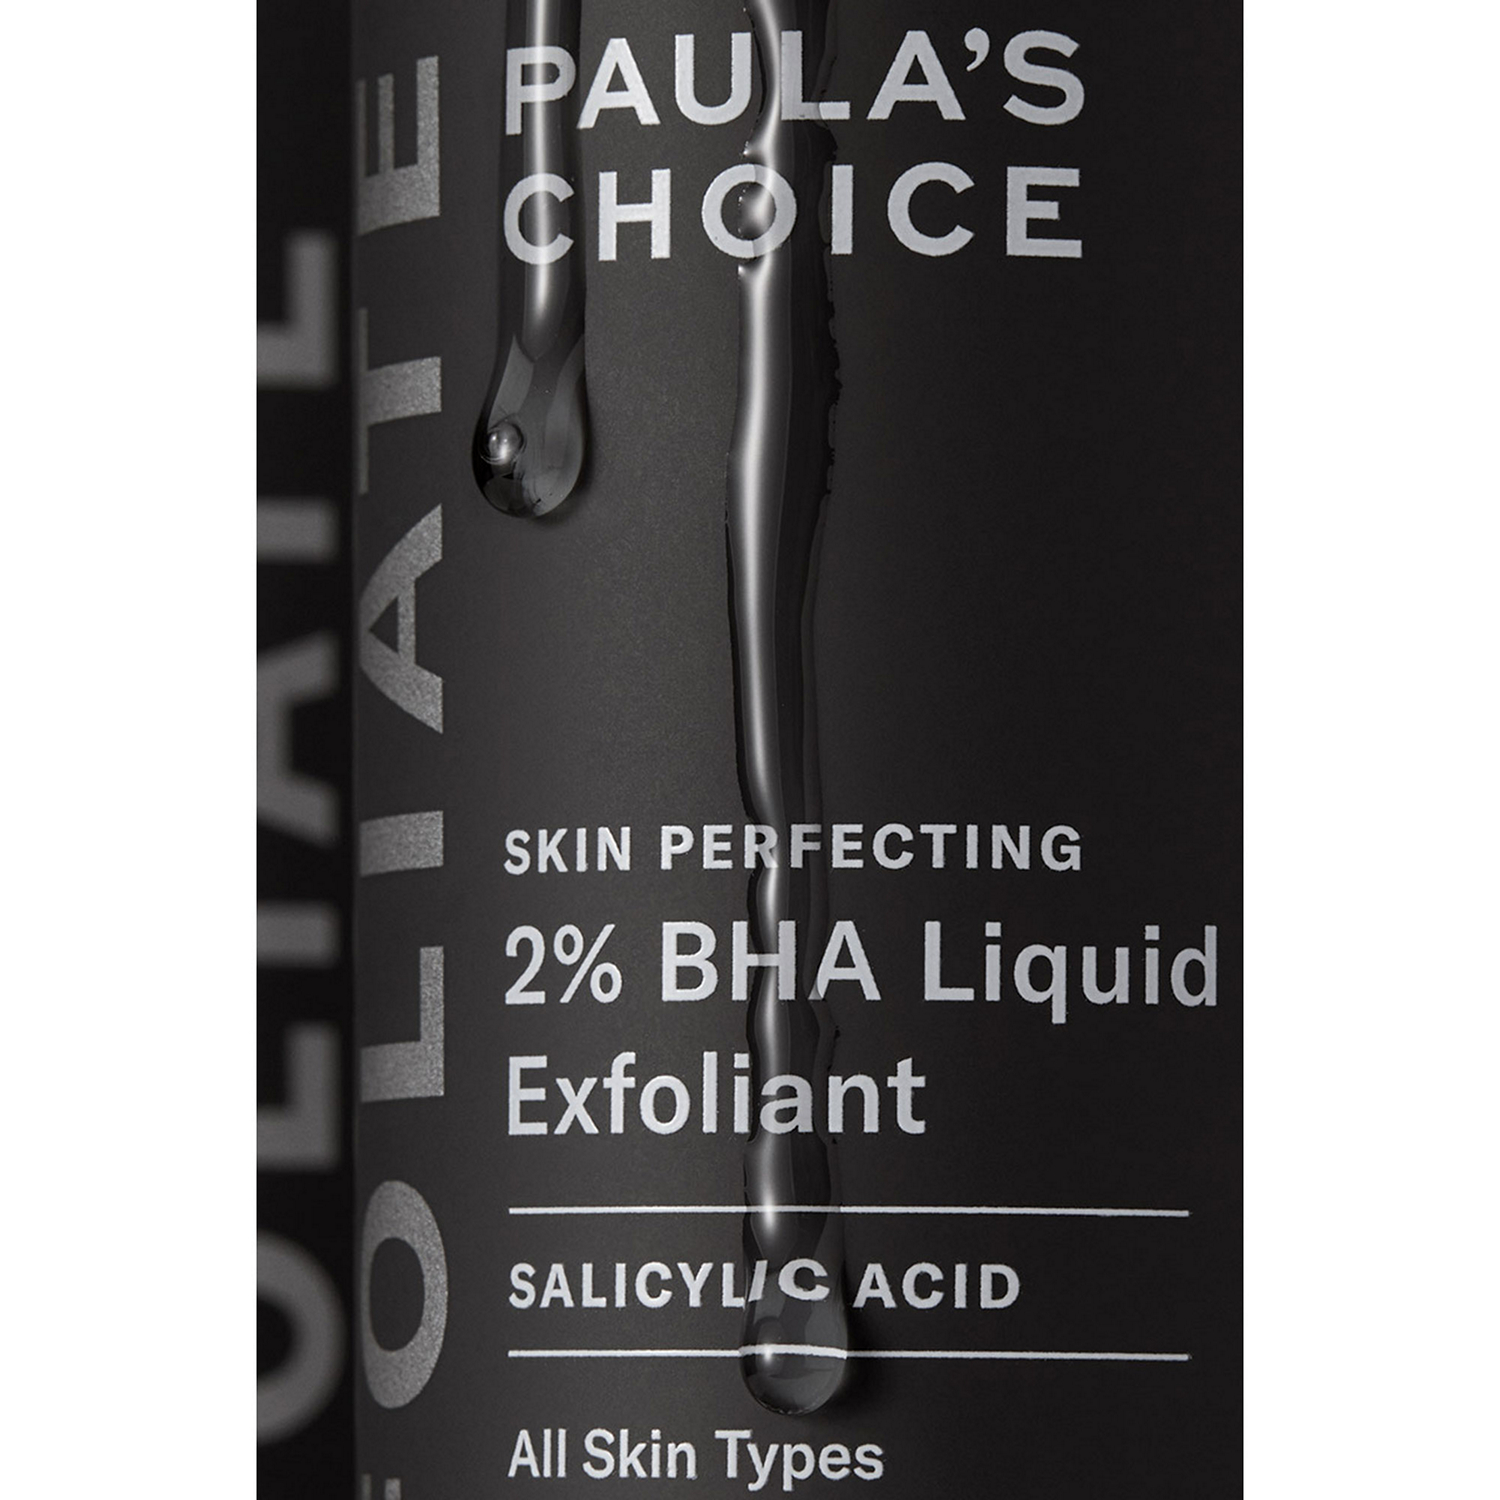 Skin Perfecting 2% BHA Liquid Exfoliant